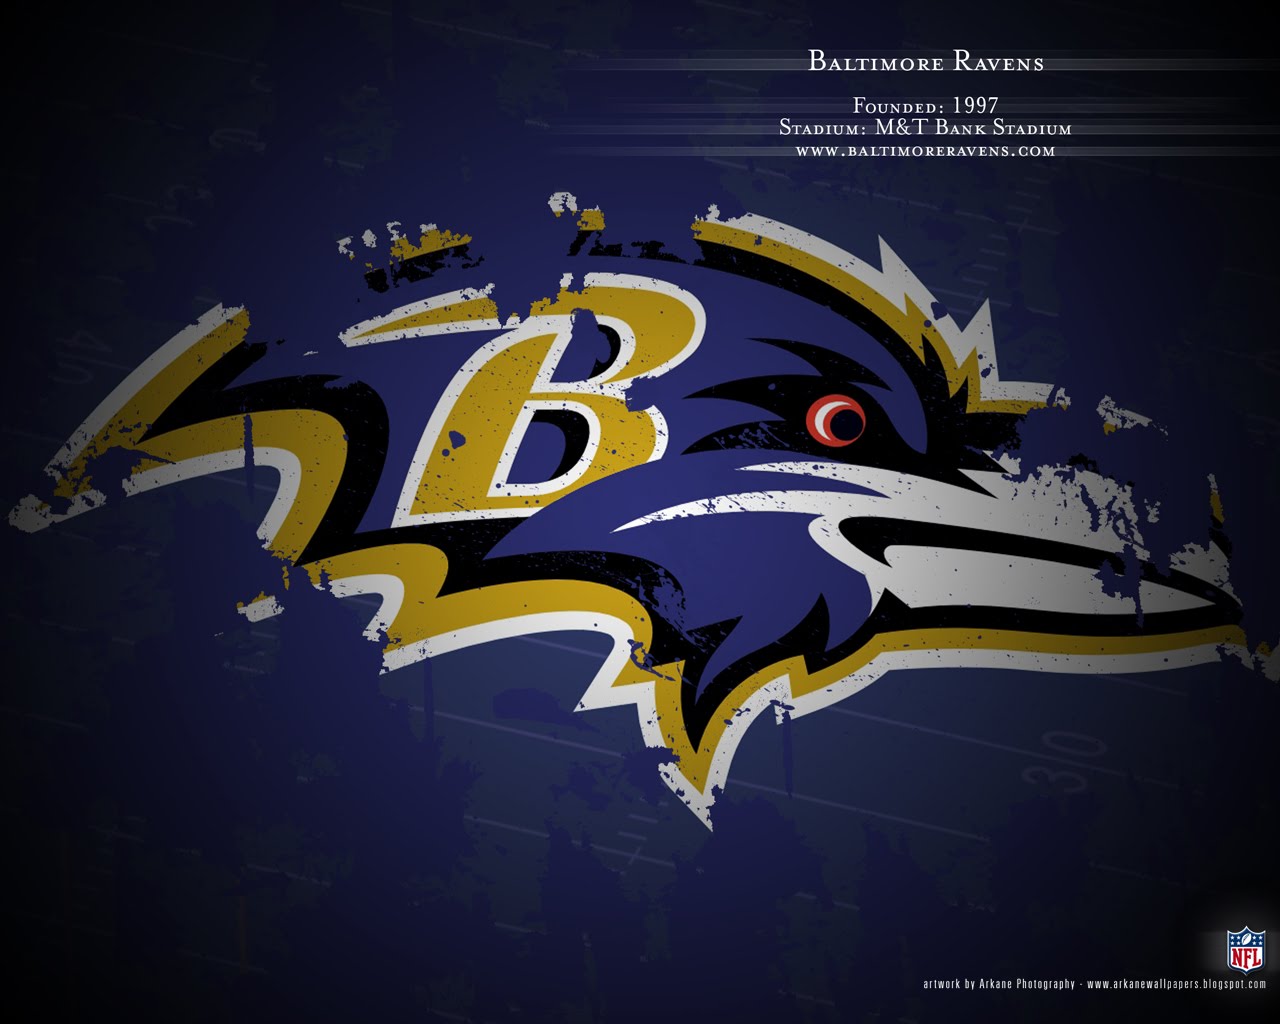 Baltimore Ravens Computer Wallpapers Desktop Backgrounds 1280x1024 1280x1024